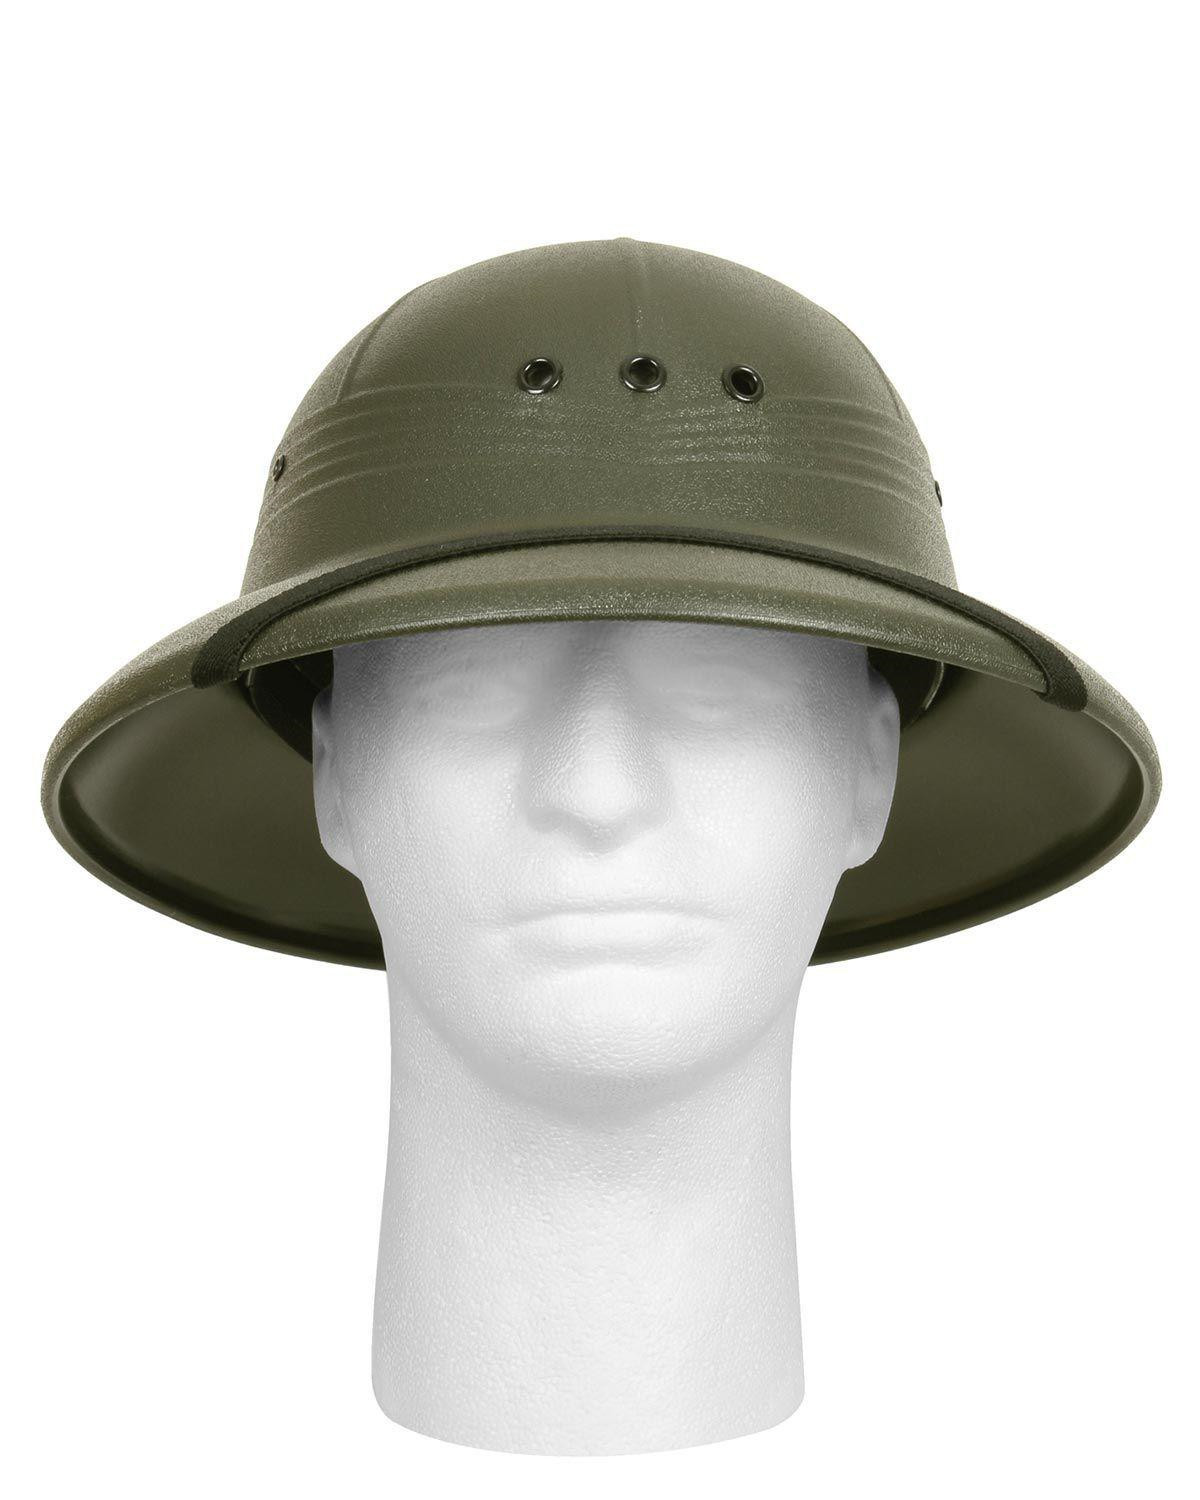 #2 - Rothco Safari Hat (Oliven, One Size)